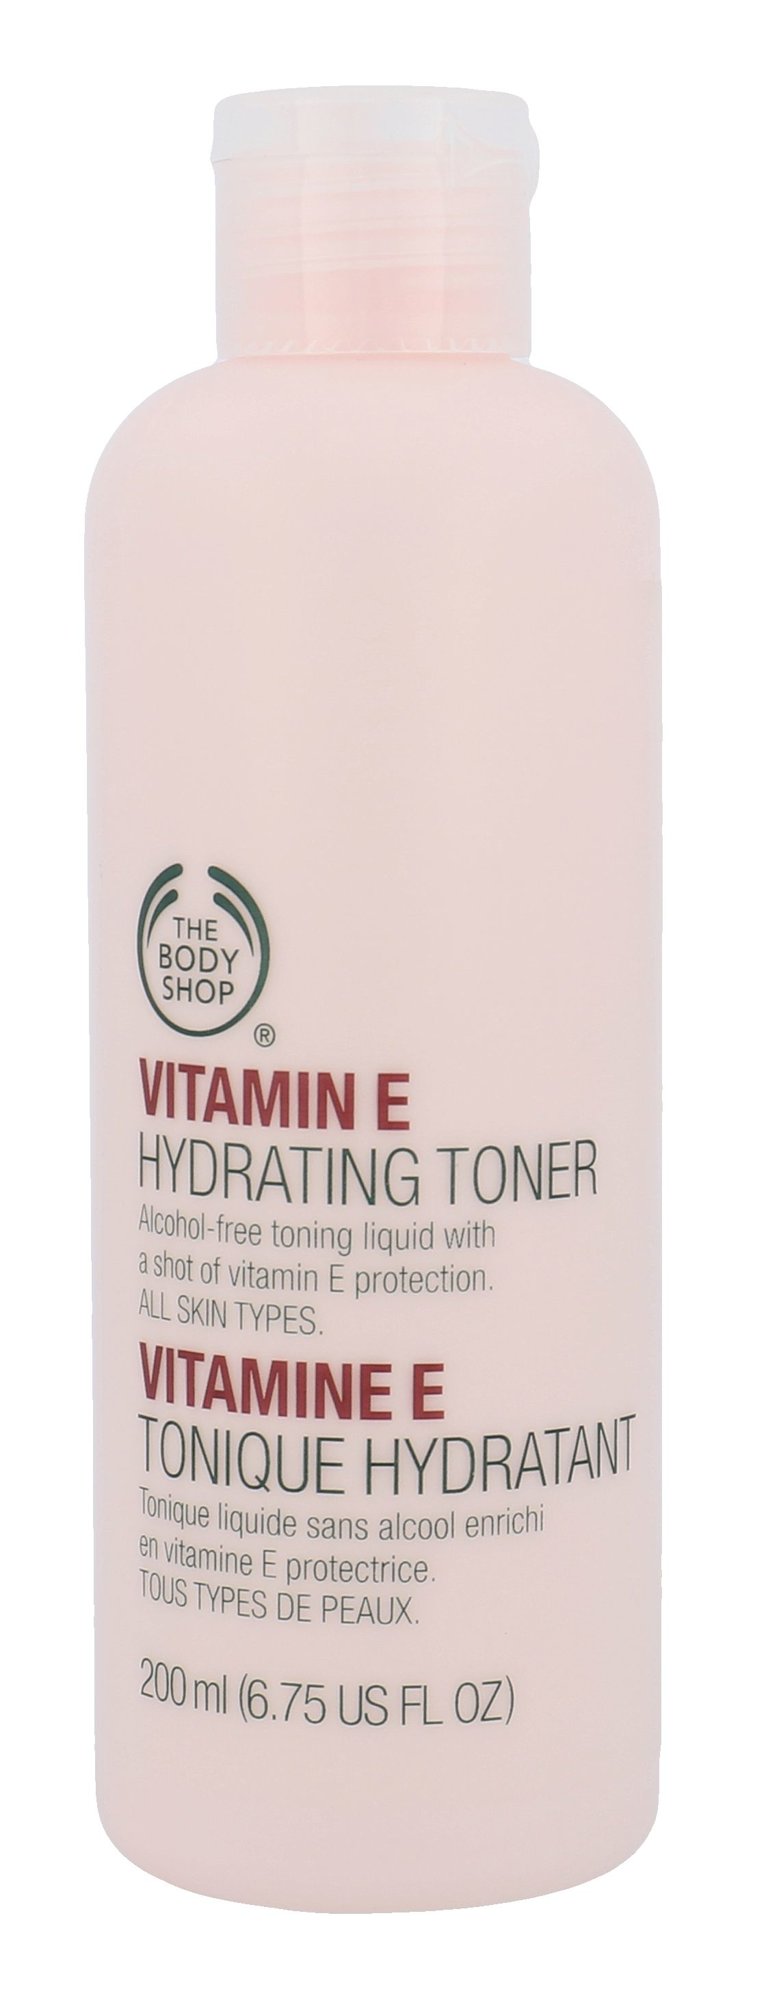 The Body Shop  Vitamin E valomasis vanduo veidui